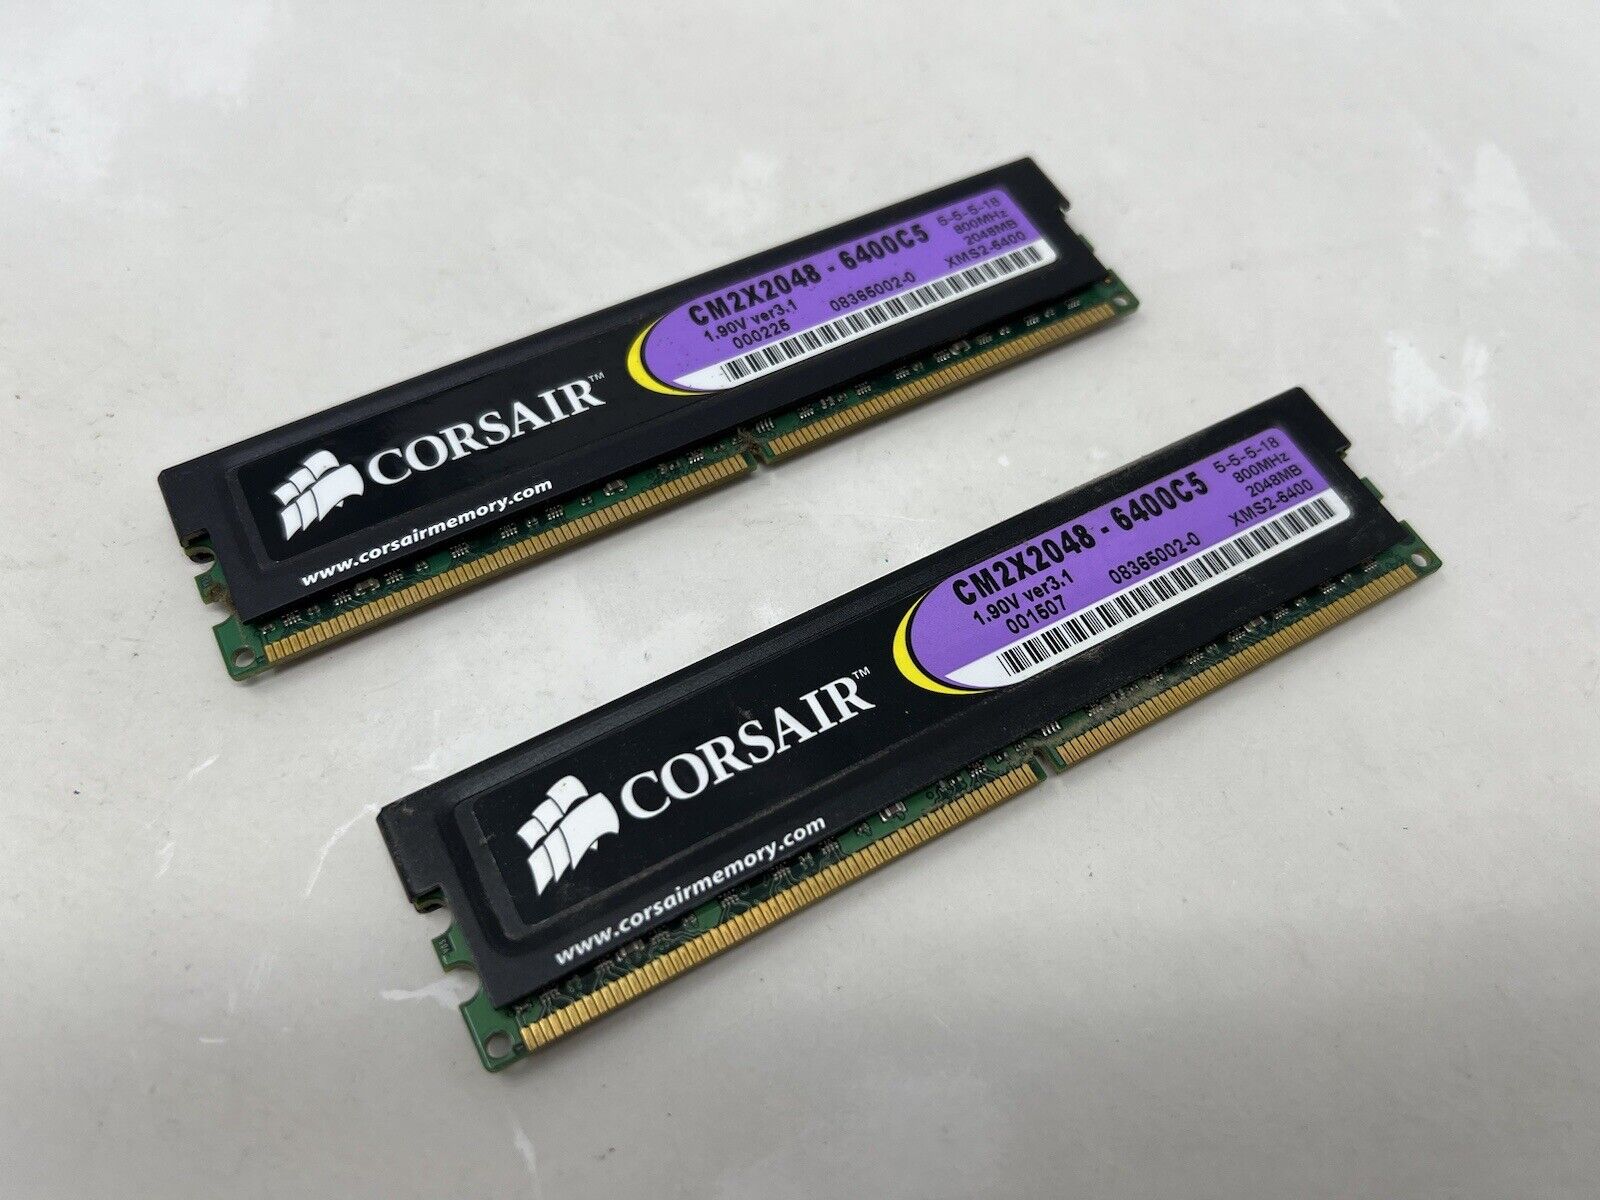 Corsair 4GB (2x2GB) XMS2-6400 CM2X2048-6400C5 DDR2 SDRAM DDR2 PC2-6400